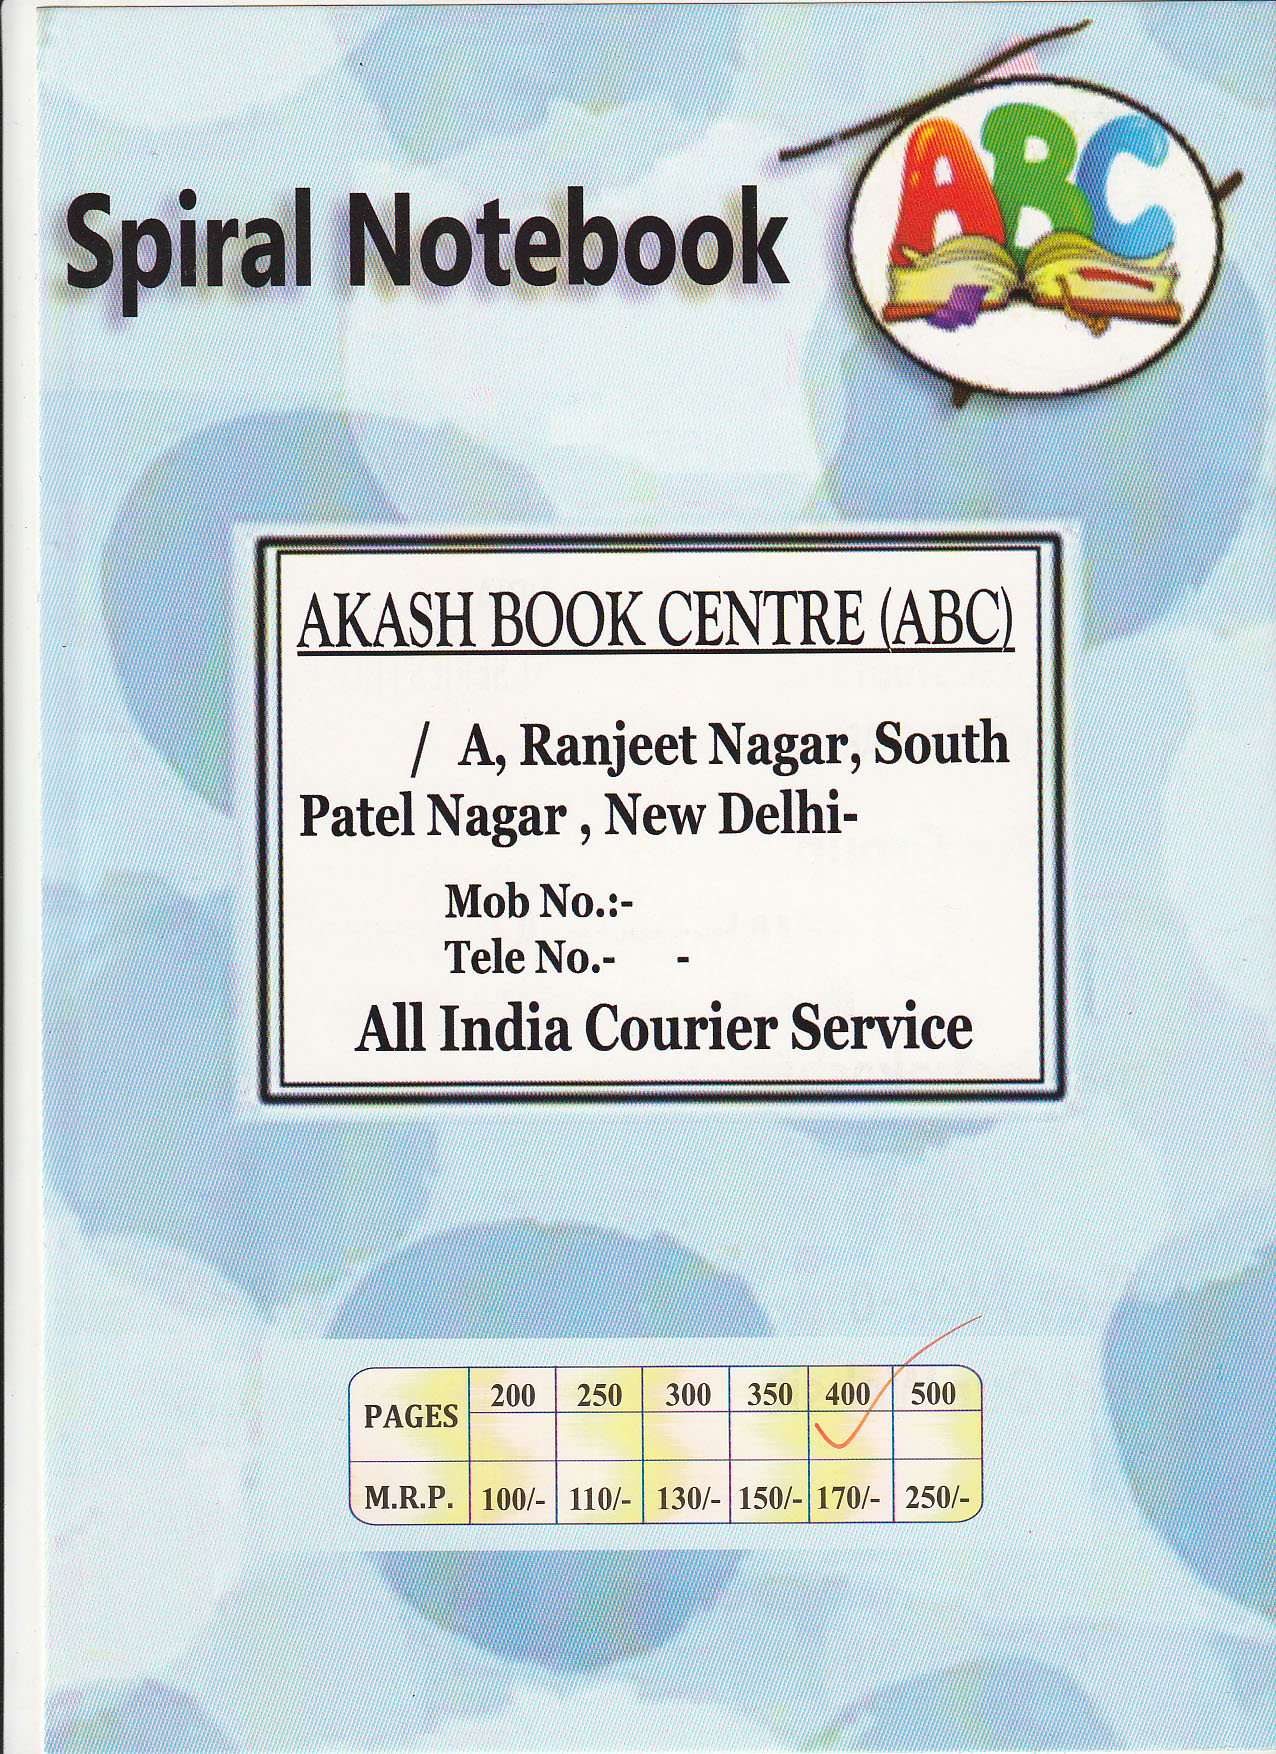 Manufacturer, Exporter, Importer, Supplier, Wholesaler, Retailer, Trader of ABC Spiral Notebook 400 Pages A4 SIZE RULED / Unruled in New Delhi, Delhi, India.